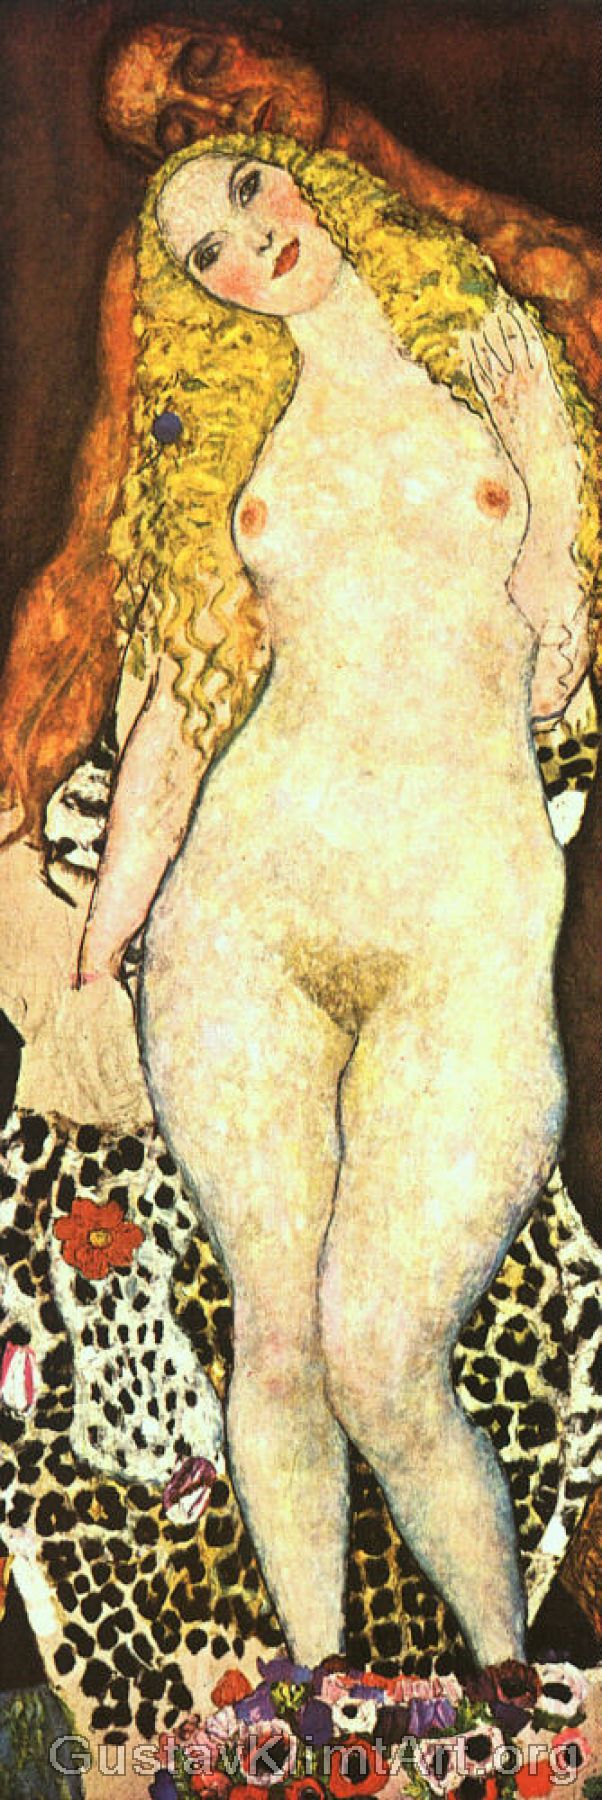 26308-Klimt,%20Gustav.jpg